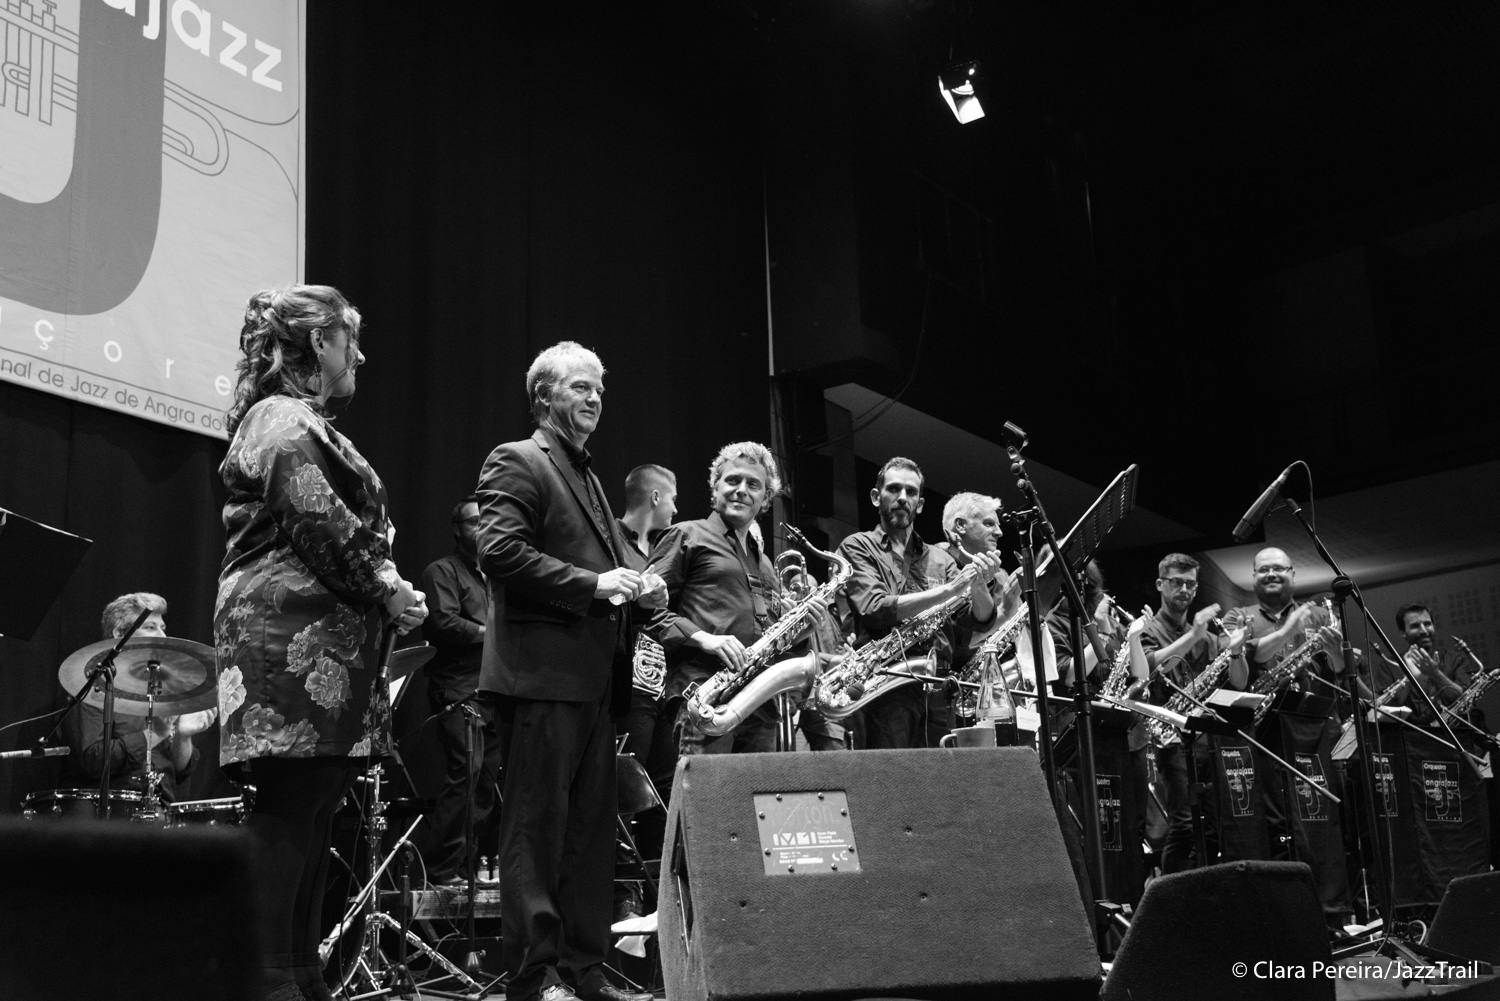 AngraJazz Orchestra, 2017